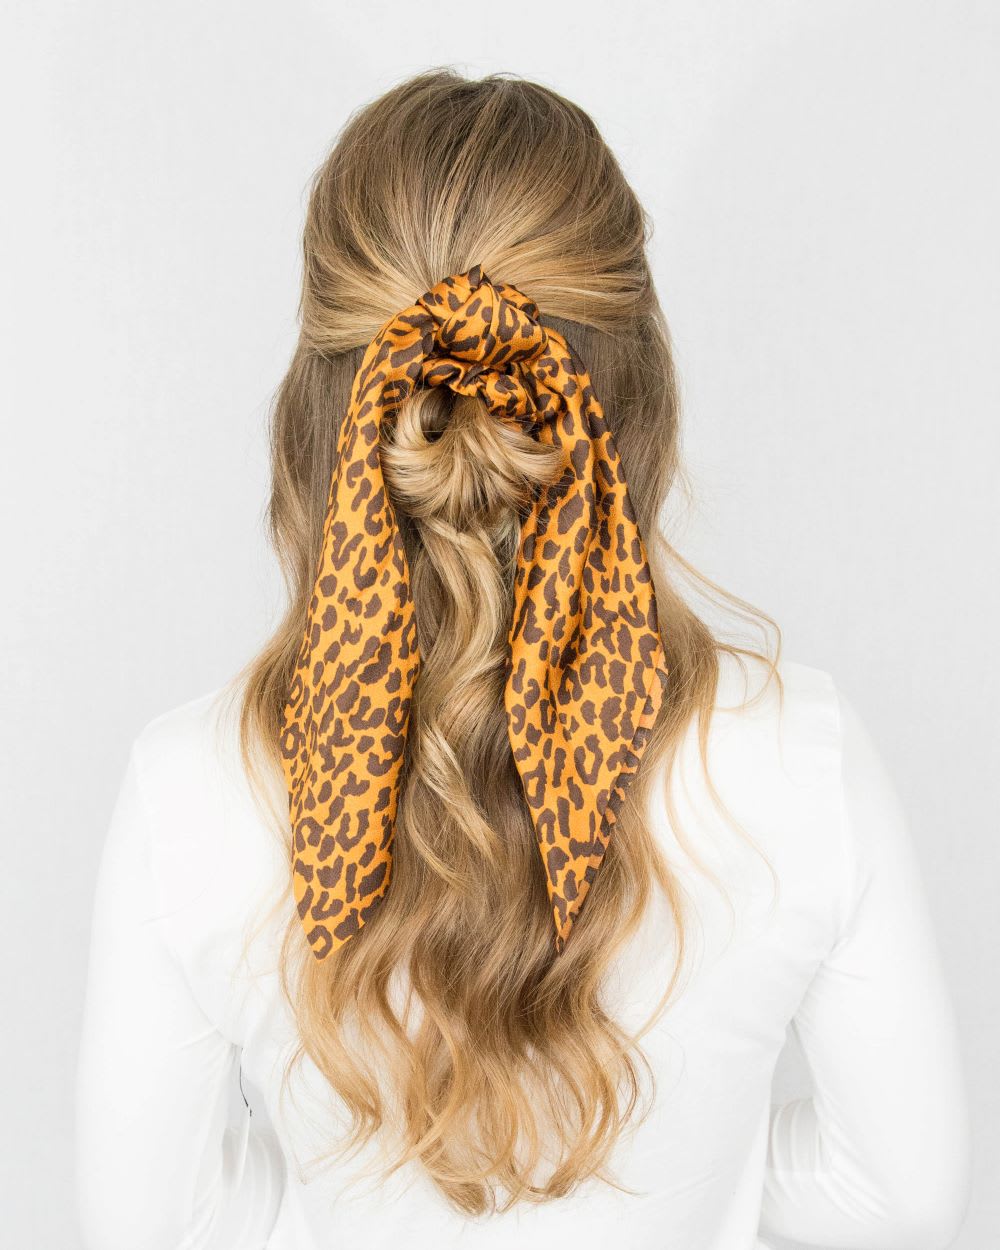 How to Tie a Hair Scarf: Five Gorgeous Ideas - Lulus.com Fashion Blog